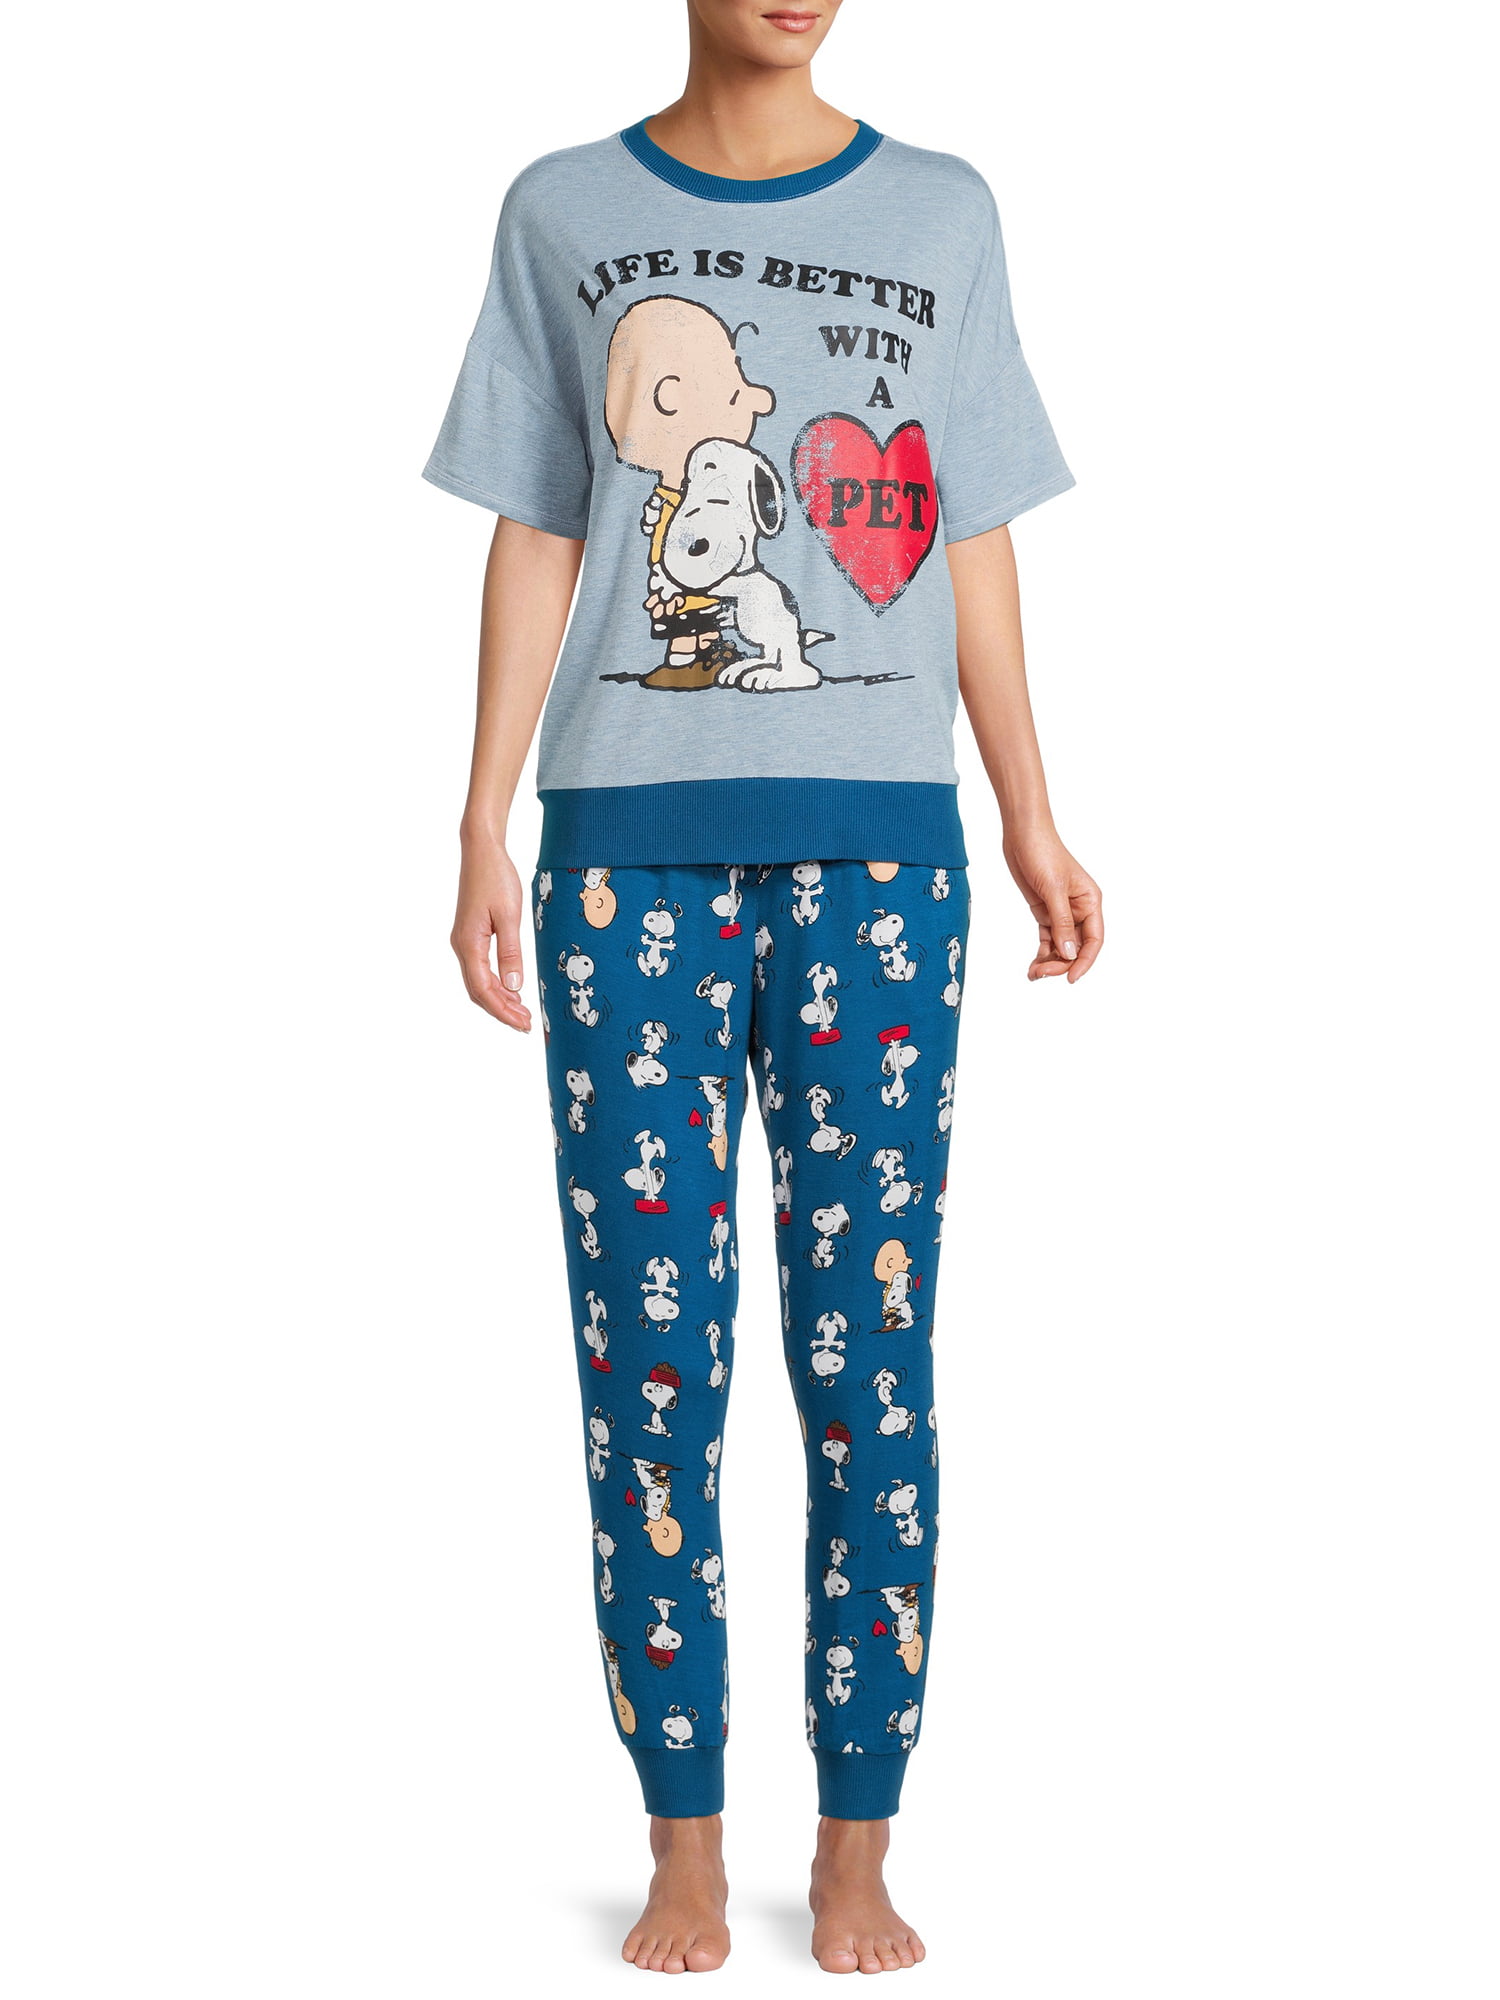 Peanuts Women\'s Snoopy Pajama Set, 2-Piece